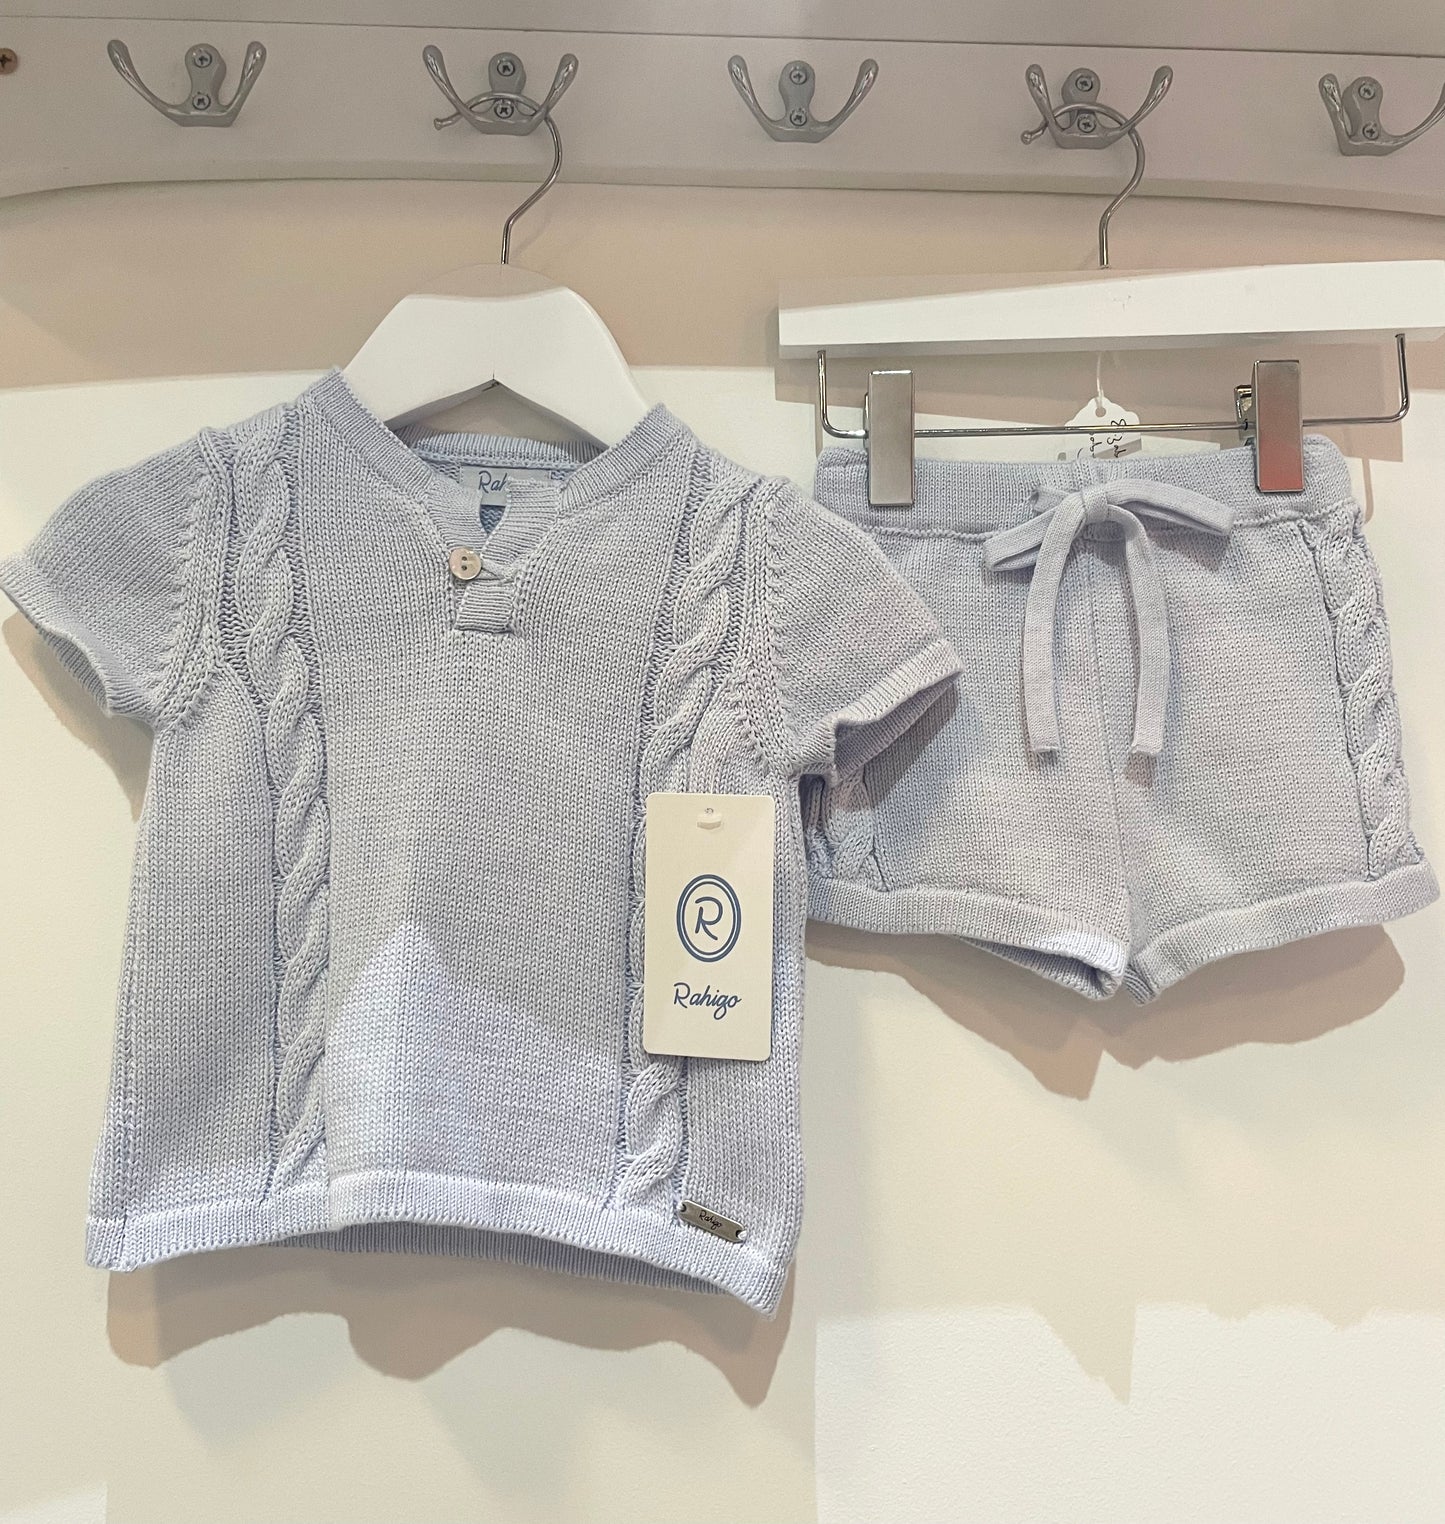 Rahigo Baby Blue Knit Top & Shorts Set